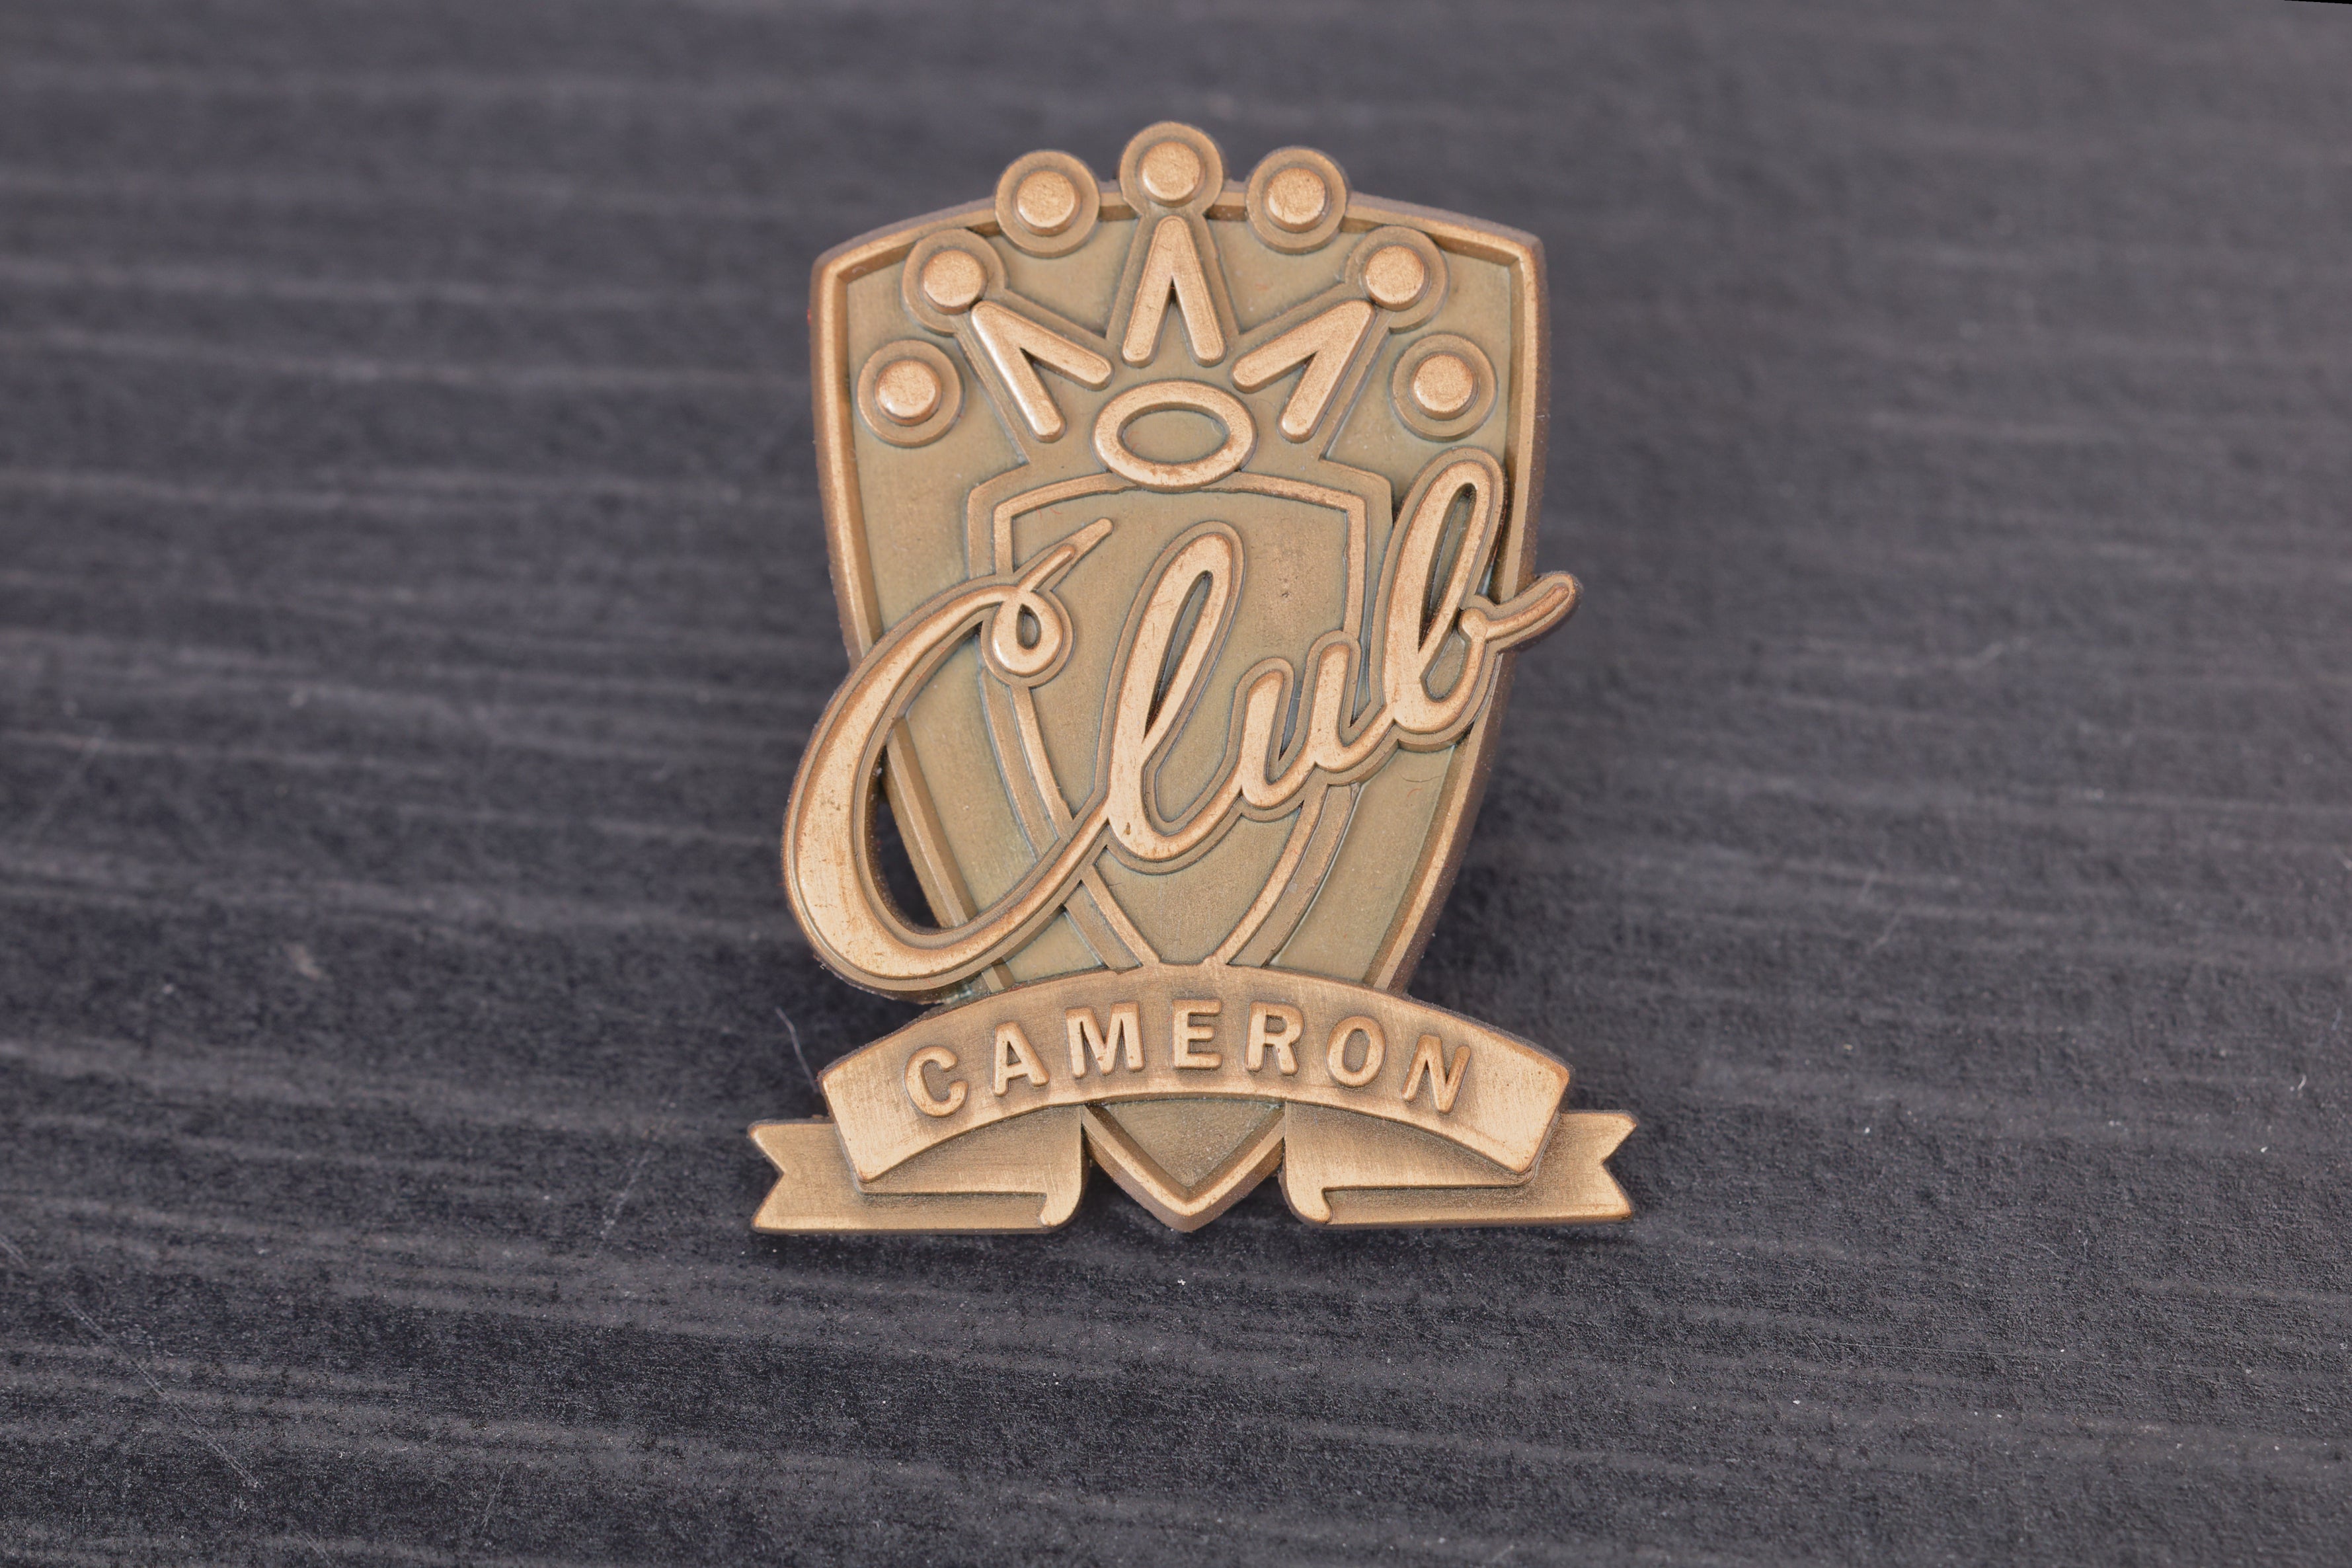 2002 Club Cameron Pin Badge